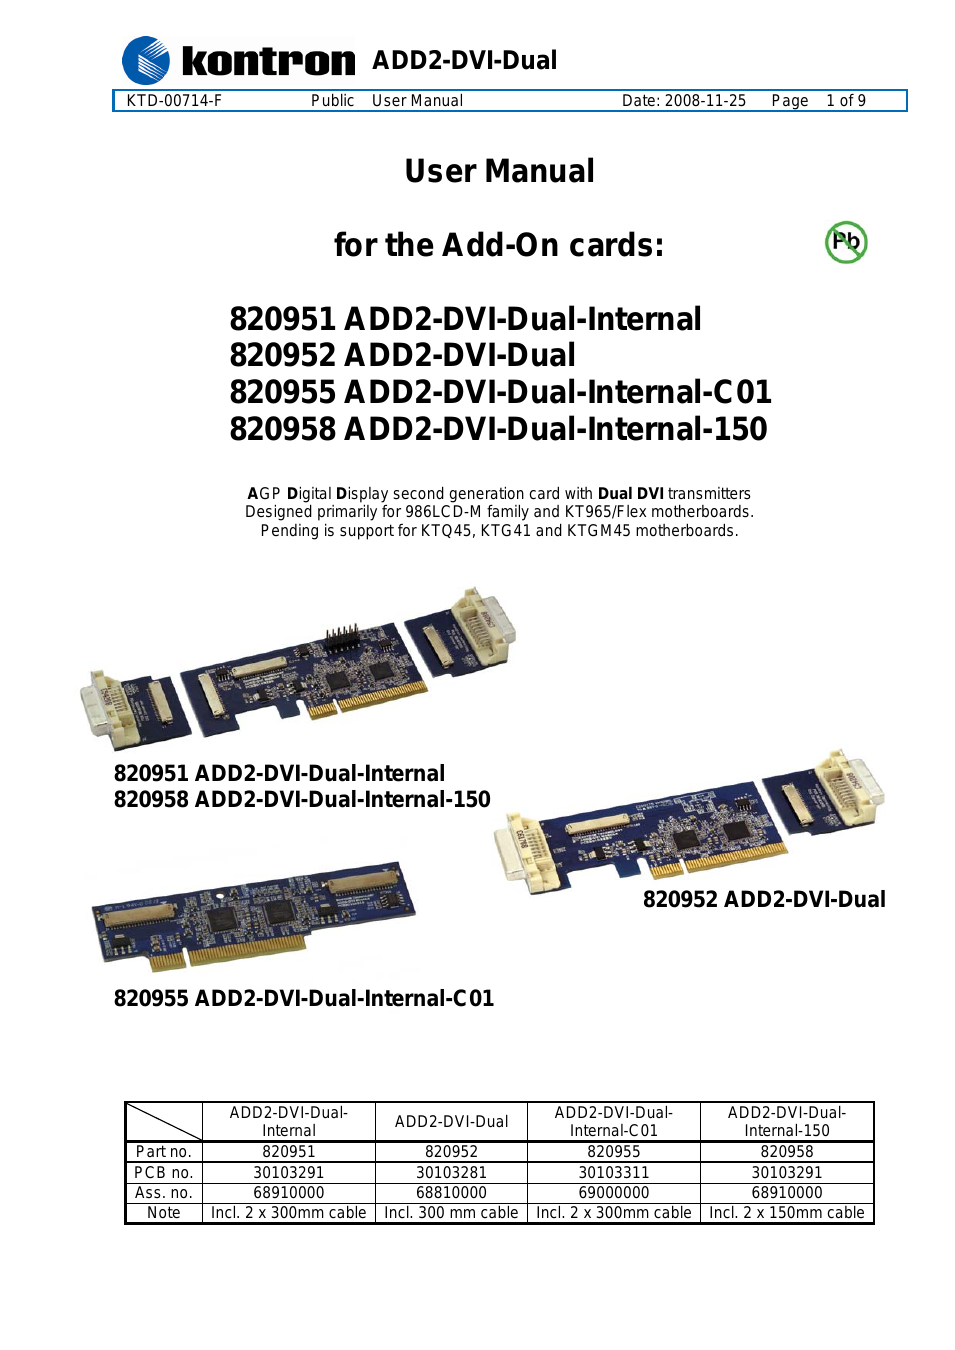 820958 ADD2-DVI-Dual-Internal-150